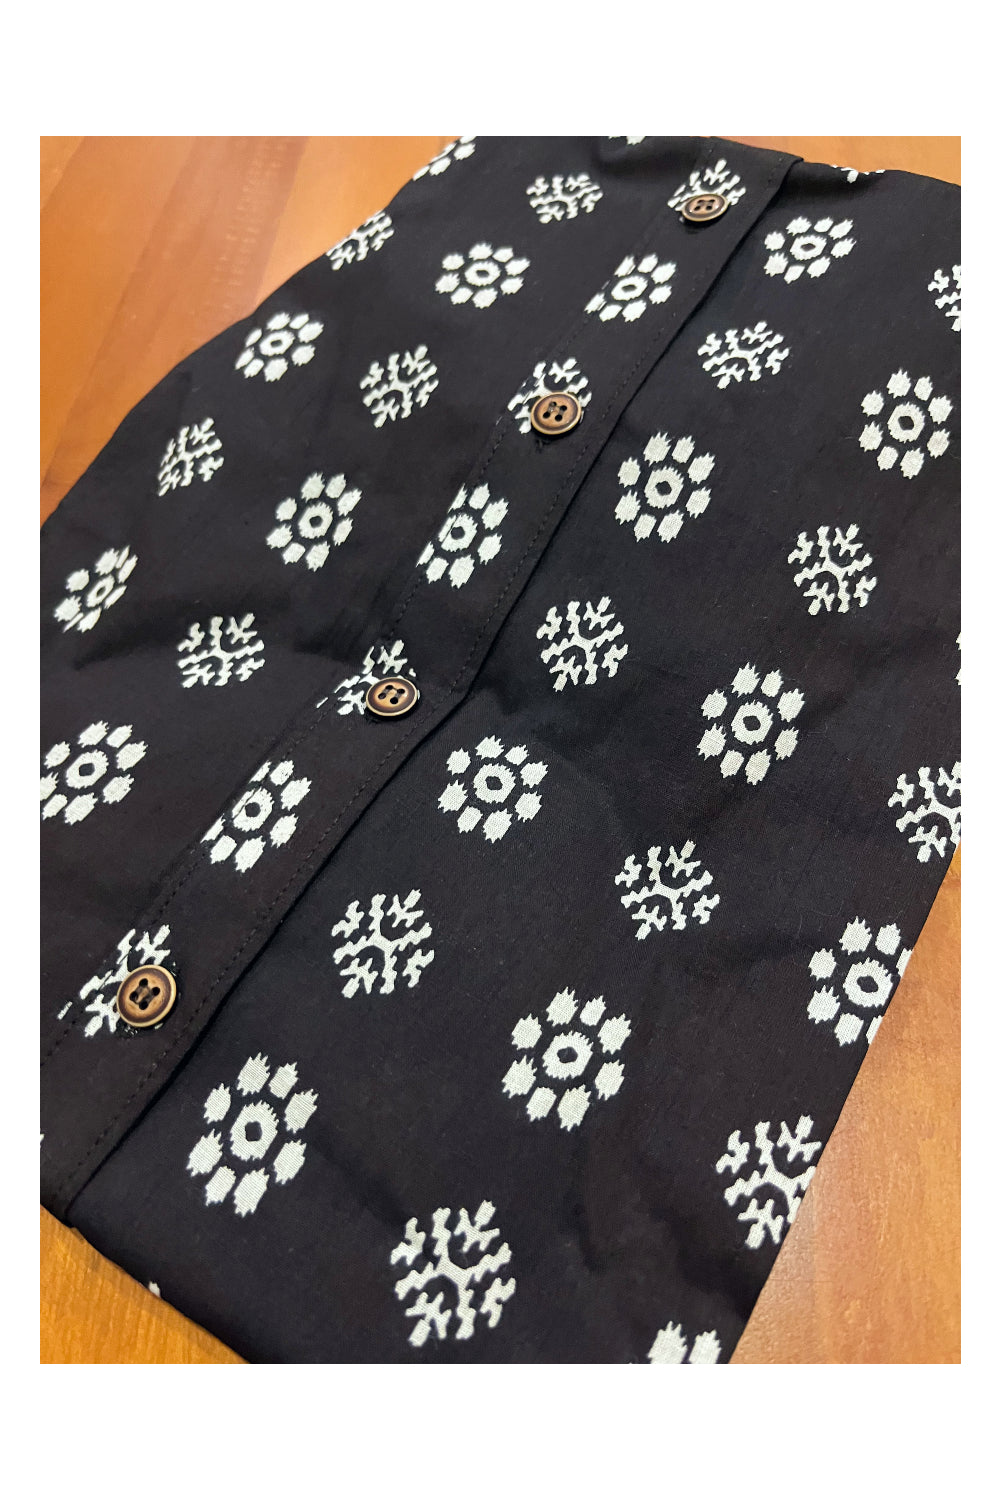 Southloom Jaipur Cotton Black Floral Hand Block Printed Mandarin Collar Shirt (Full Sleeves)